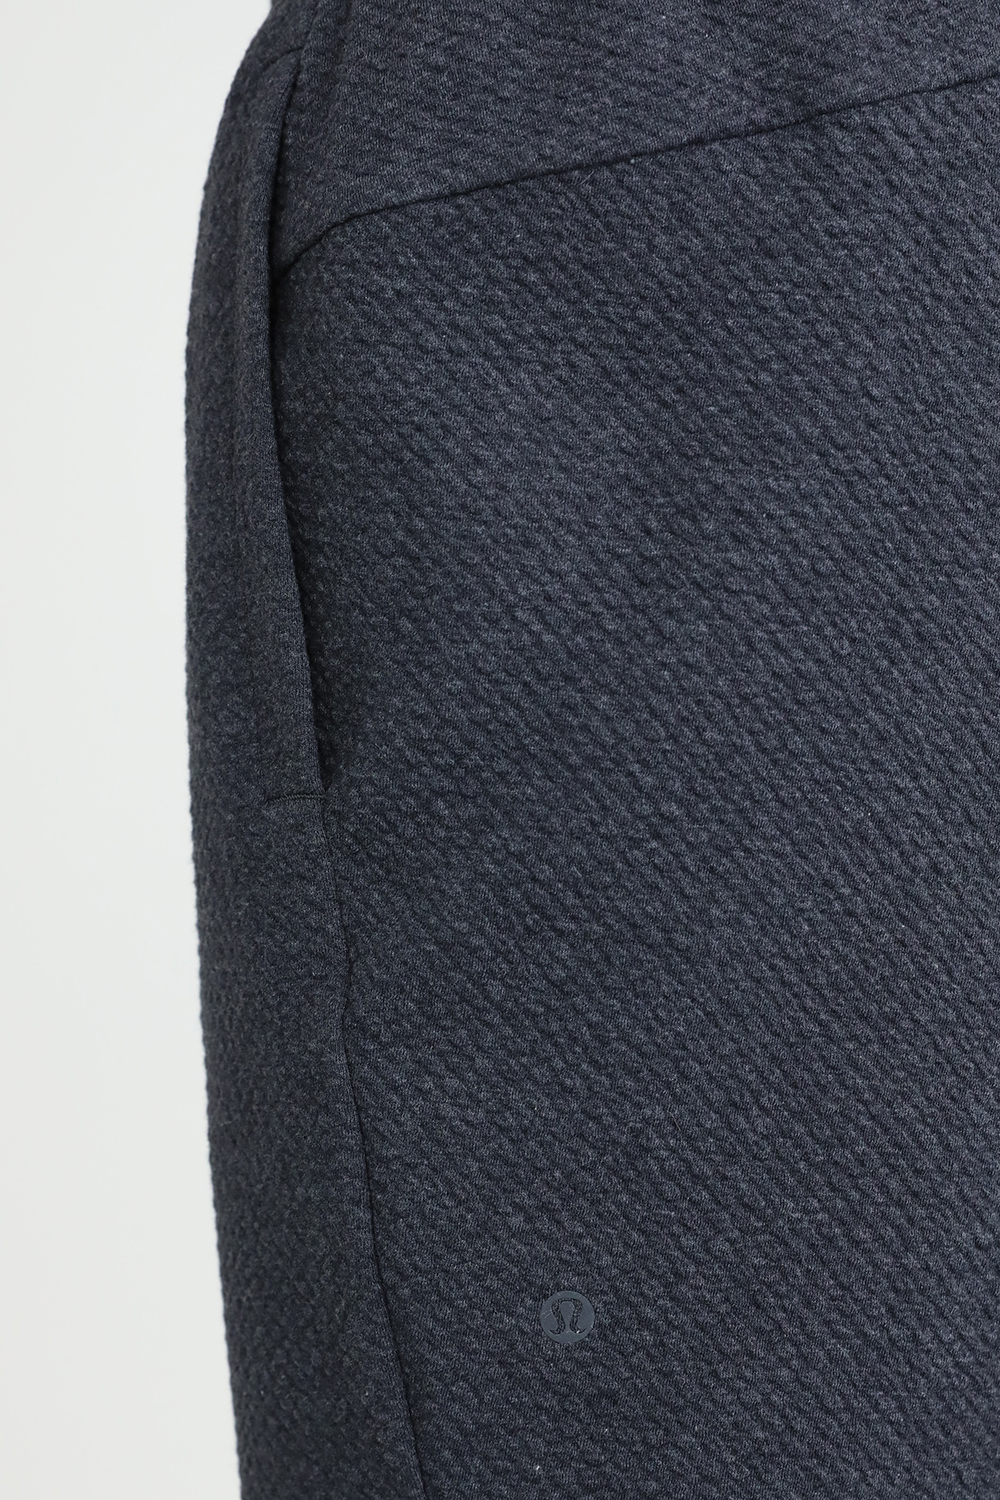 Textured Double Knit Cotton Short 7 LULULEMON